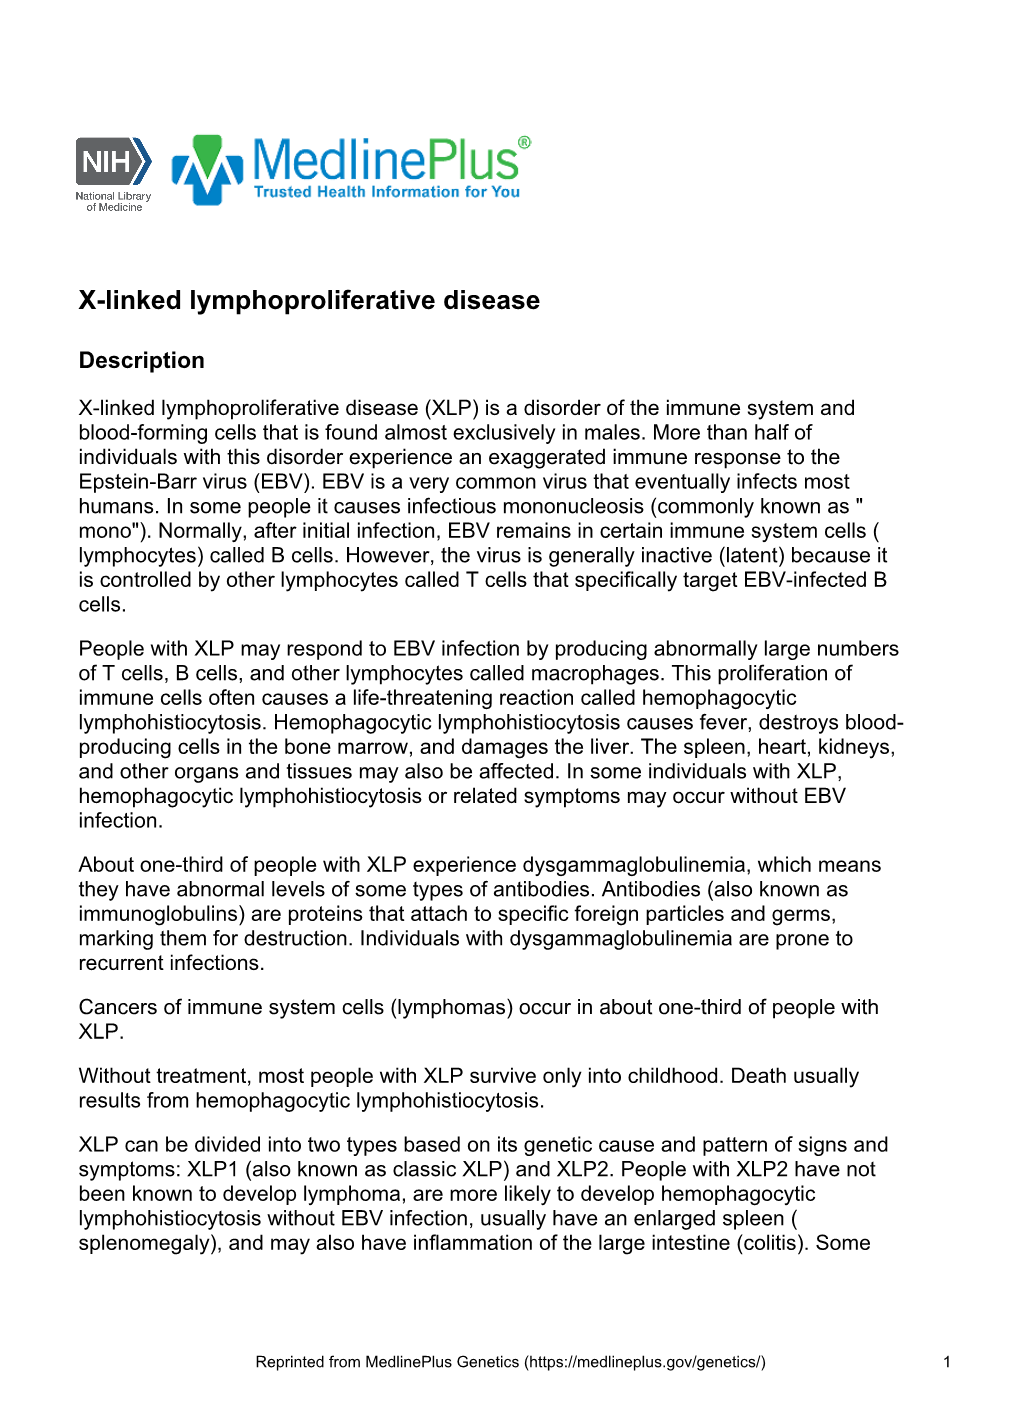 X-Linked Lymphoproliferative Disease